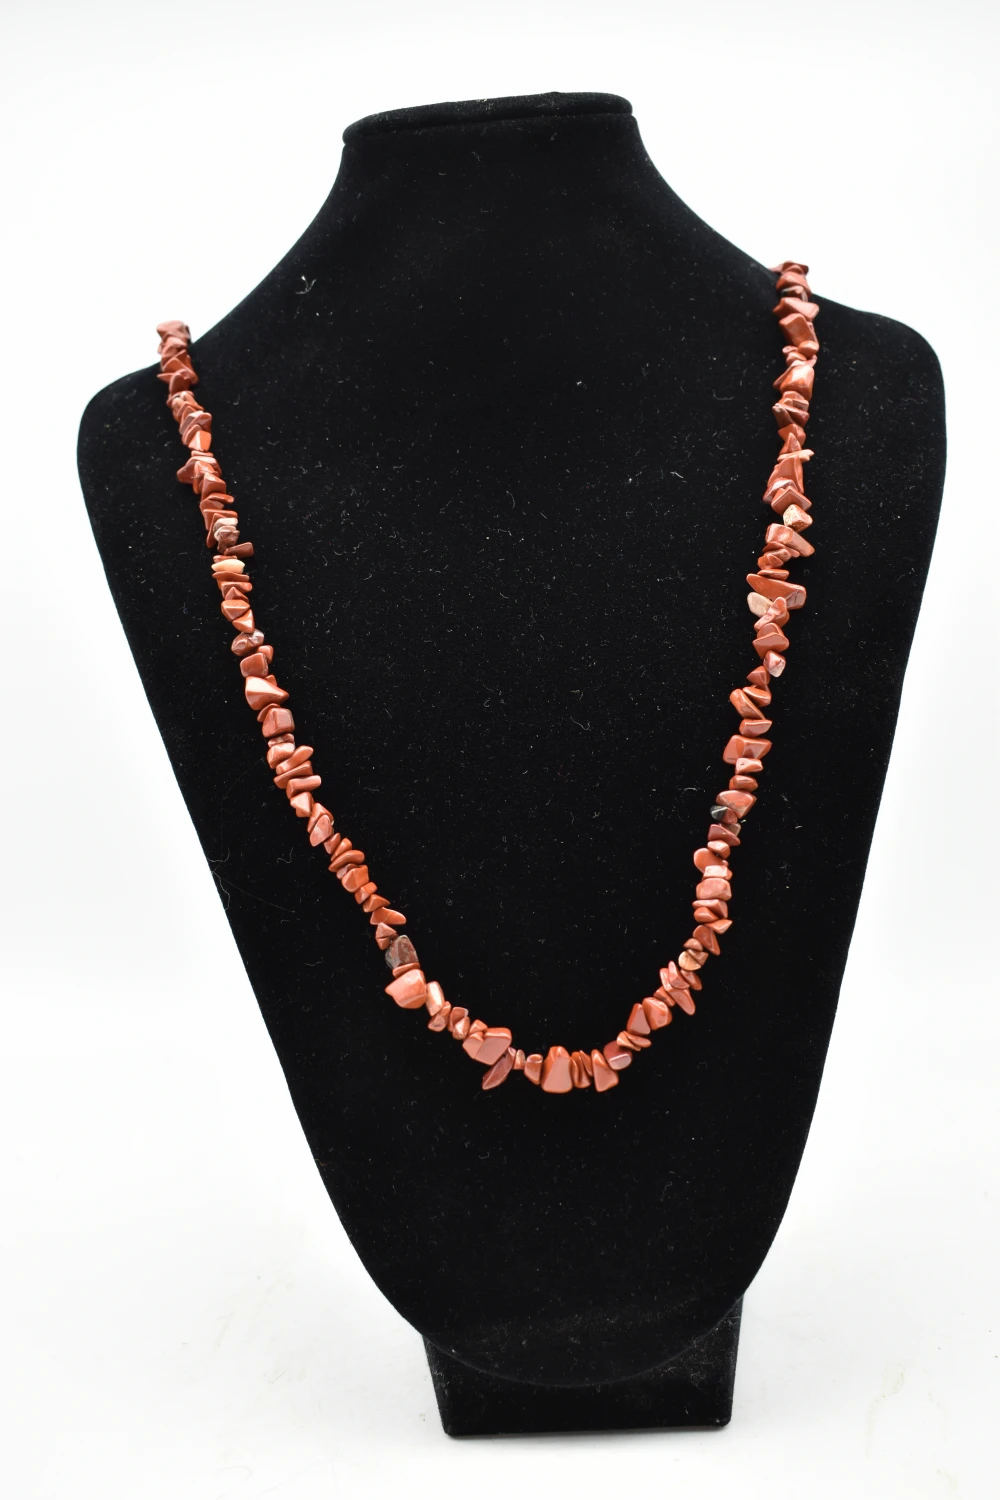 Red Jasper stones necklace